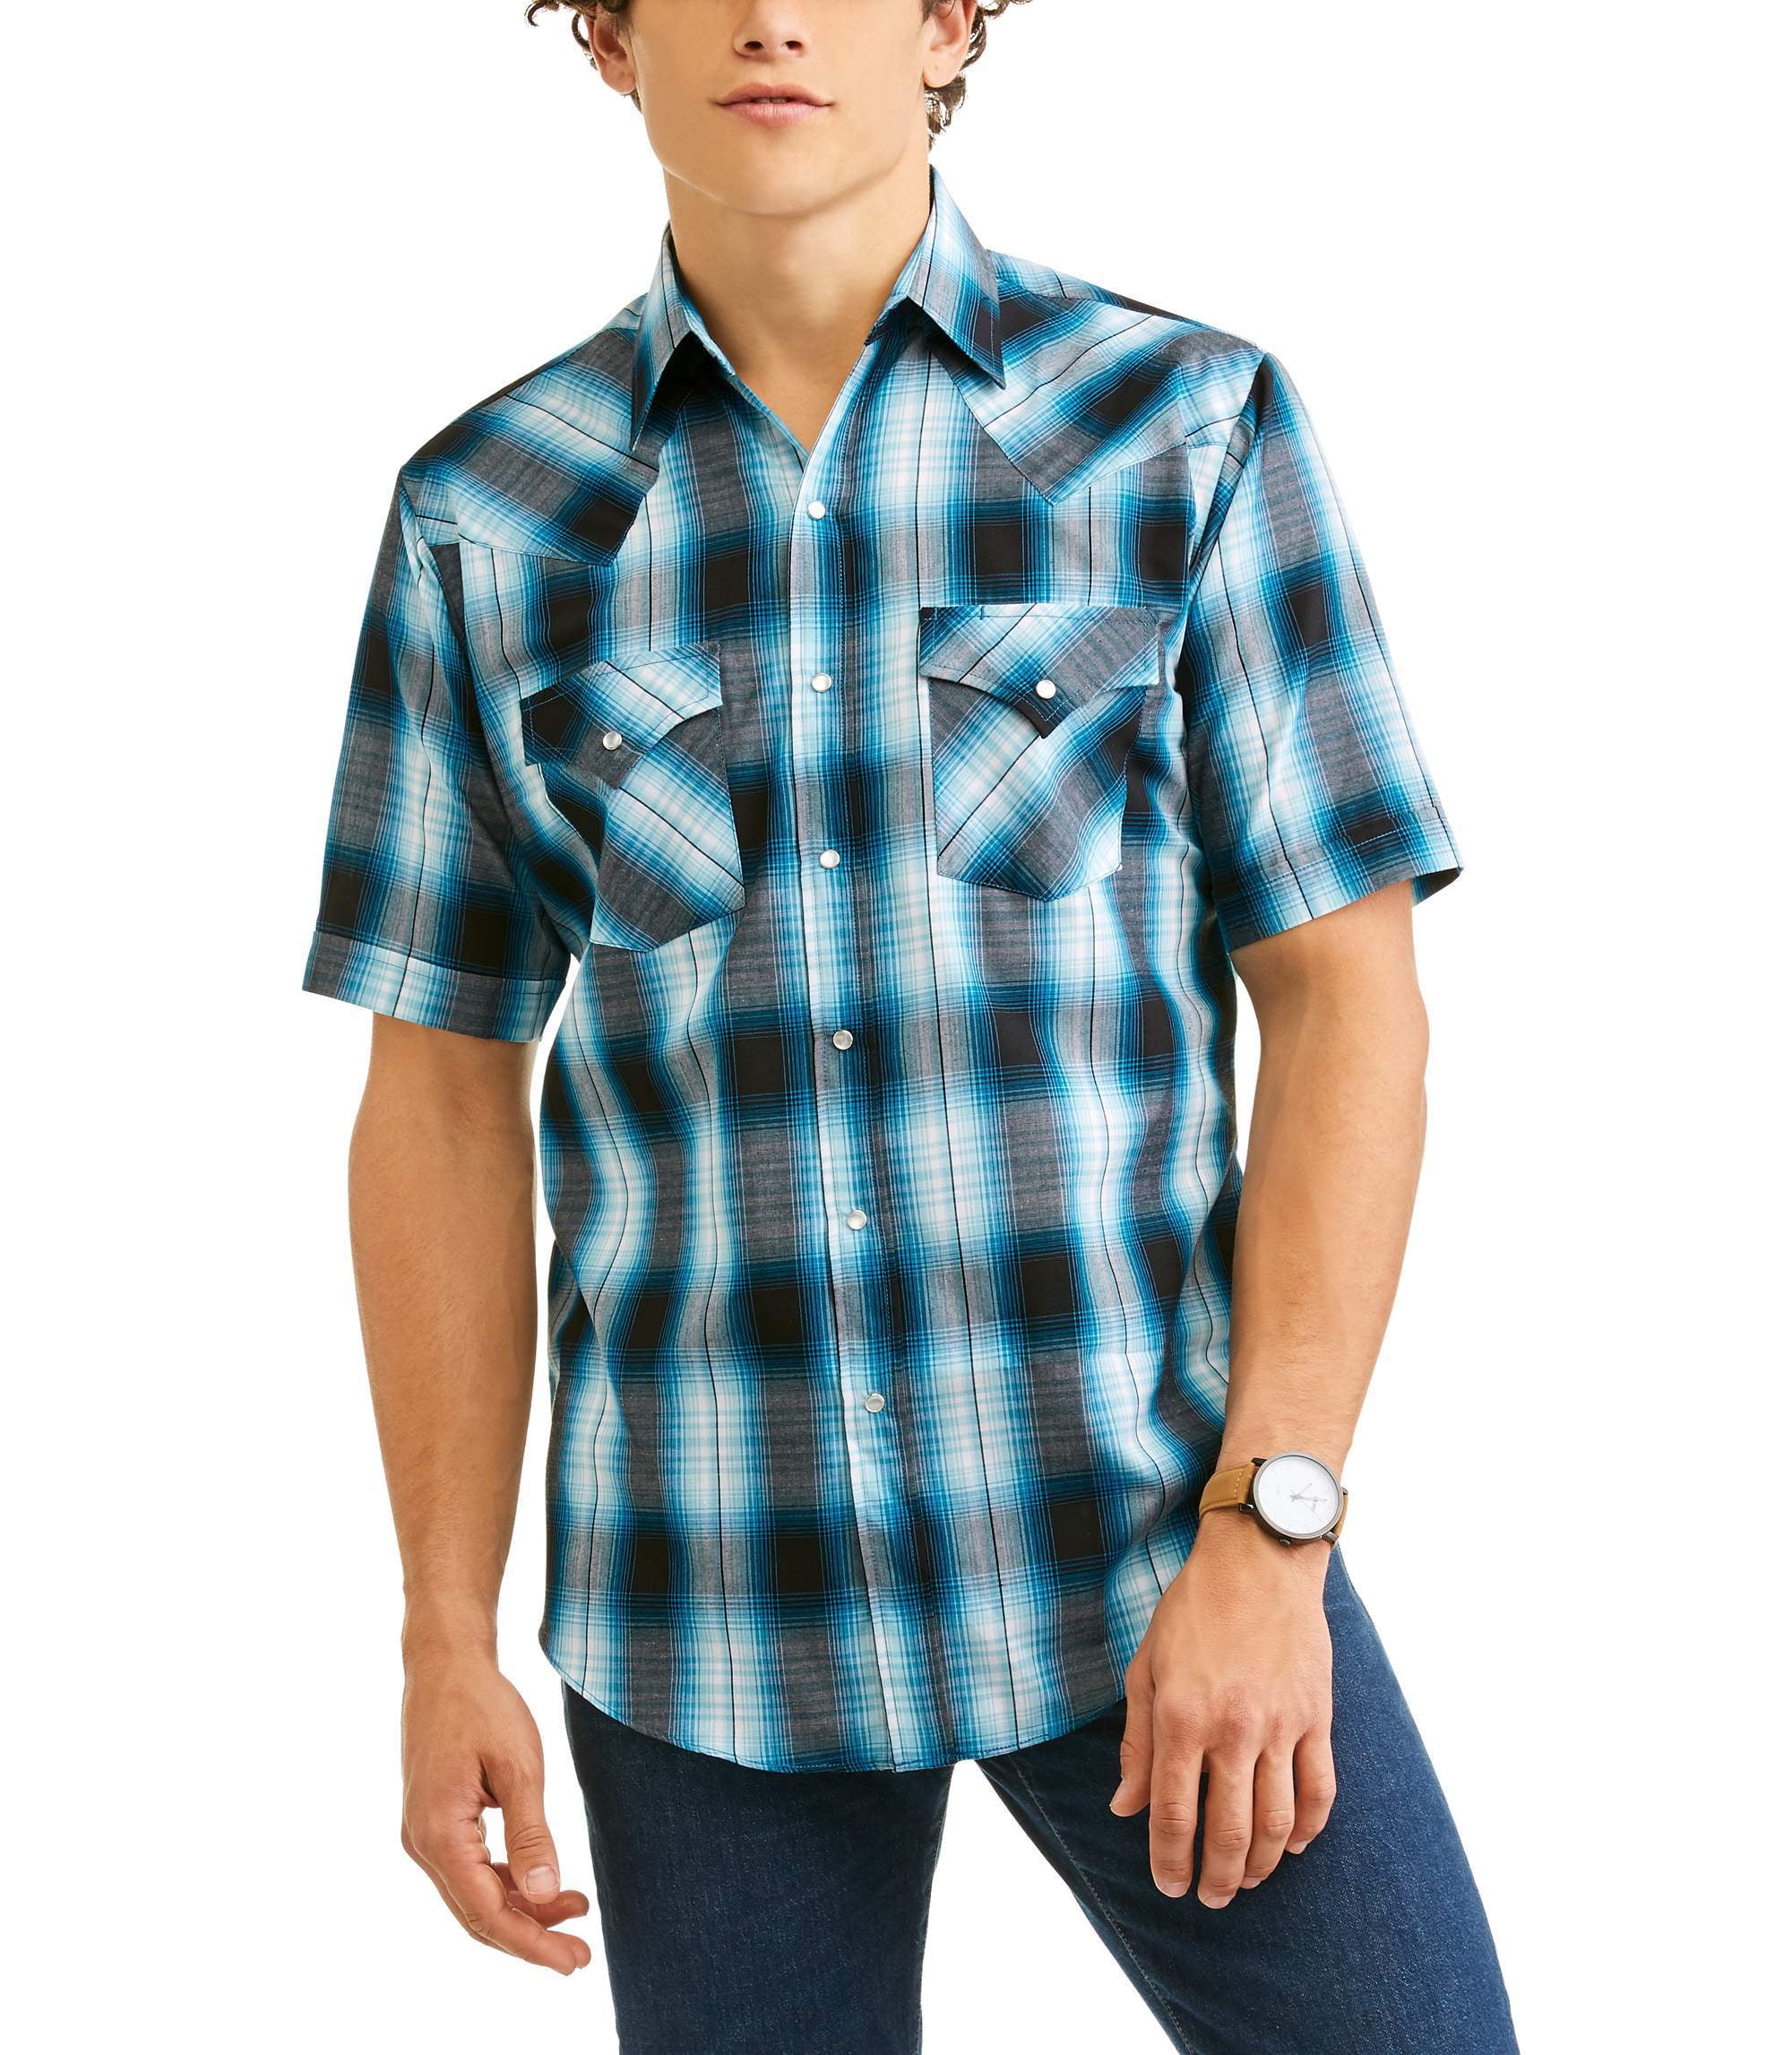 Plains Big men's short sleeve plaid western shirt - Walmart.com